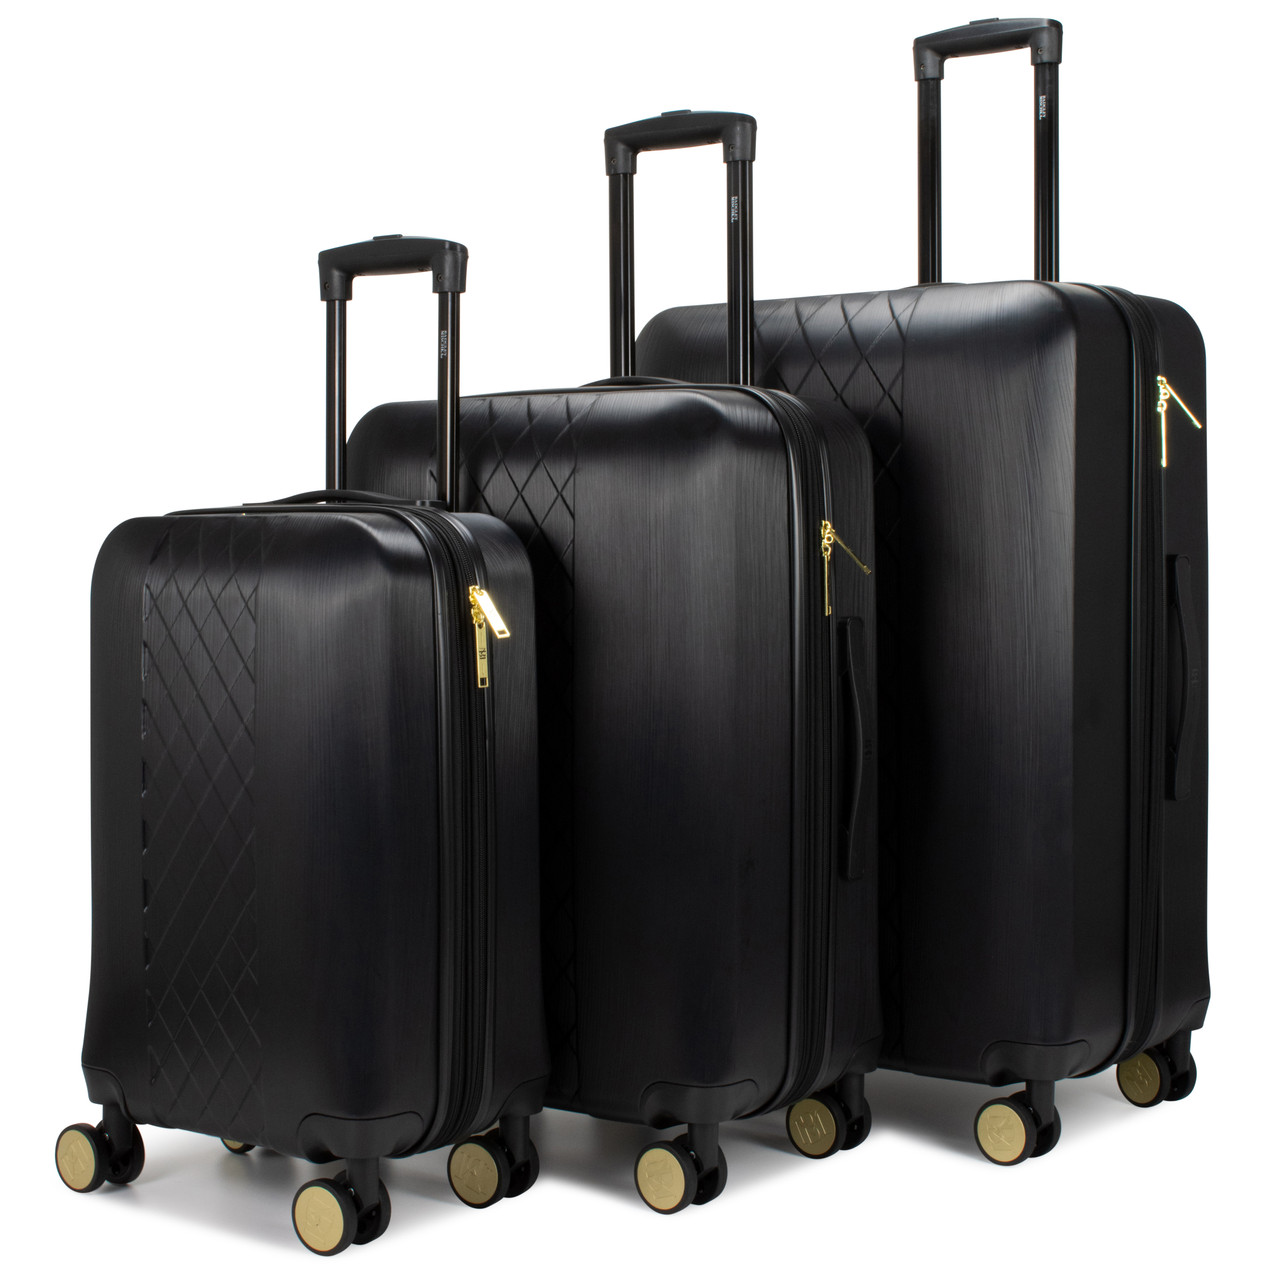 Badgley Mischka Diamond 3 Piece Expandable Luggage Set (Burgundy)